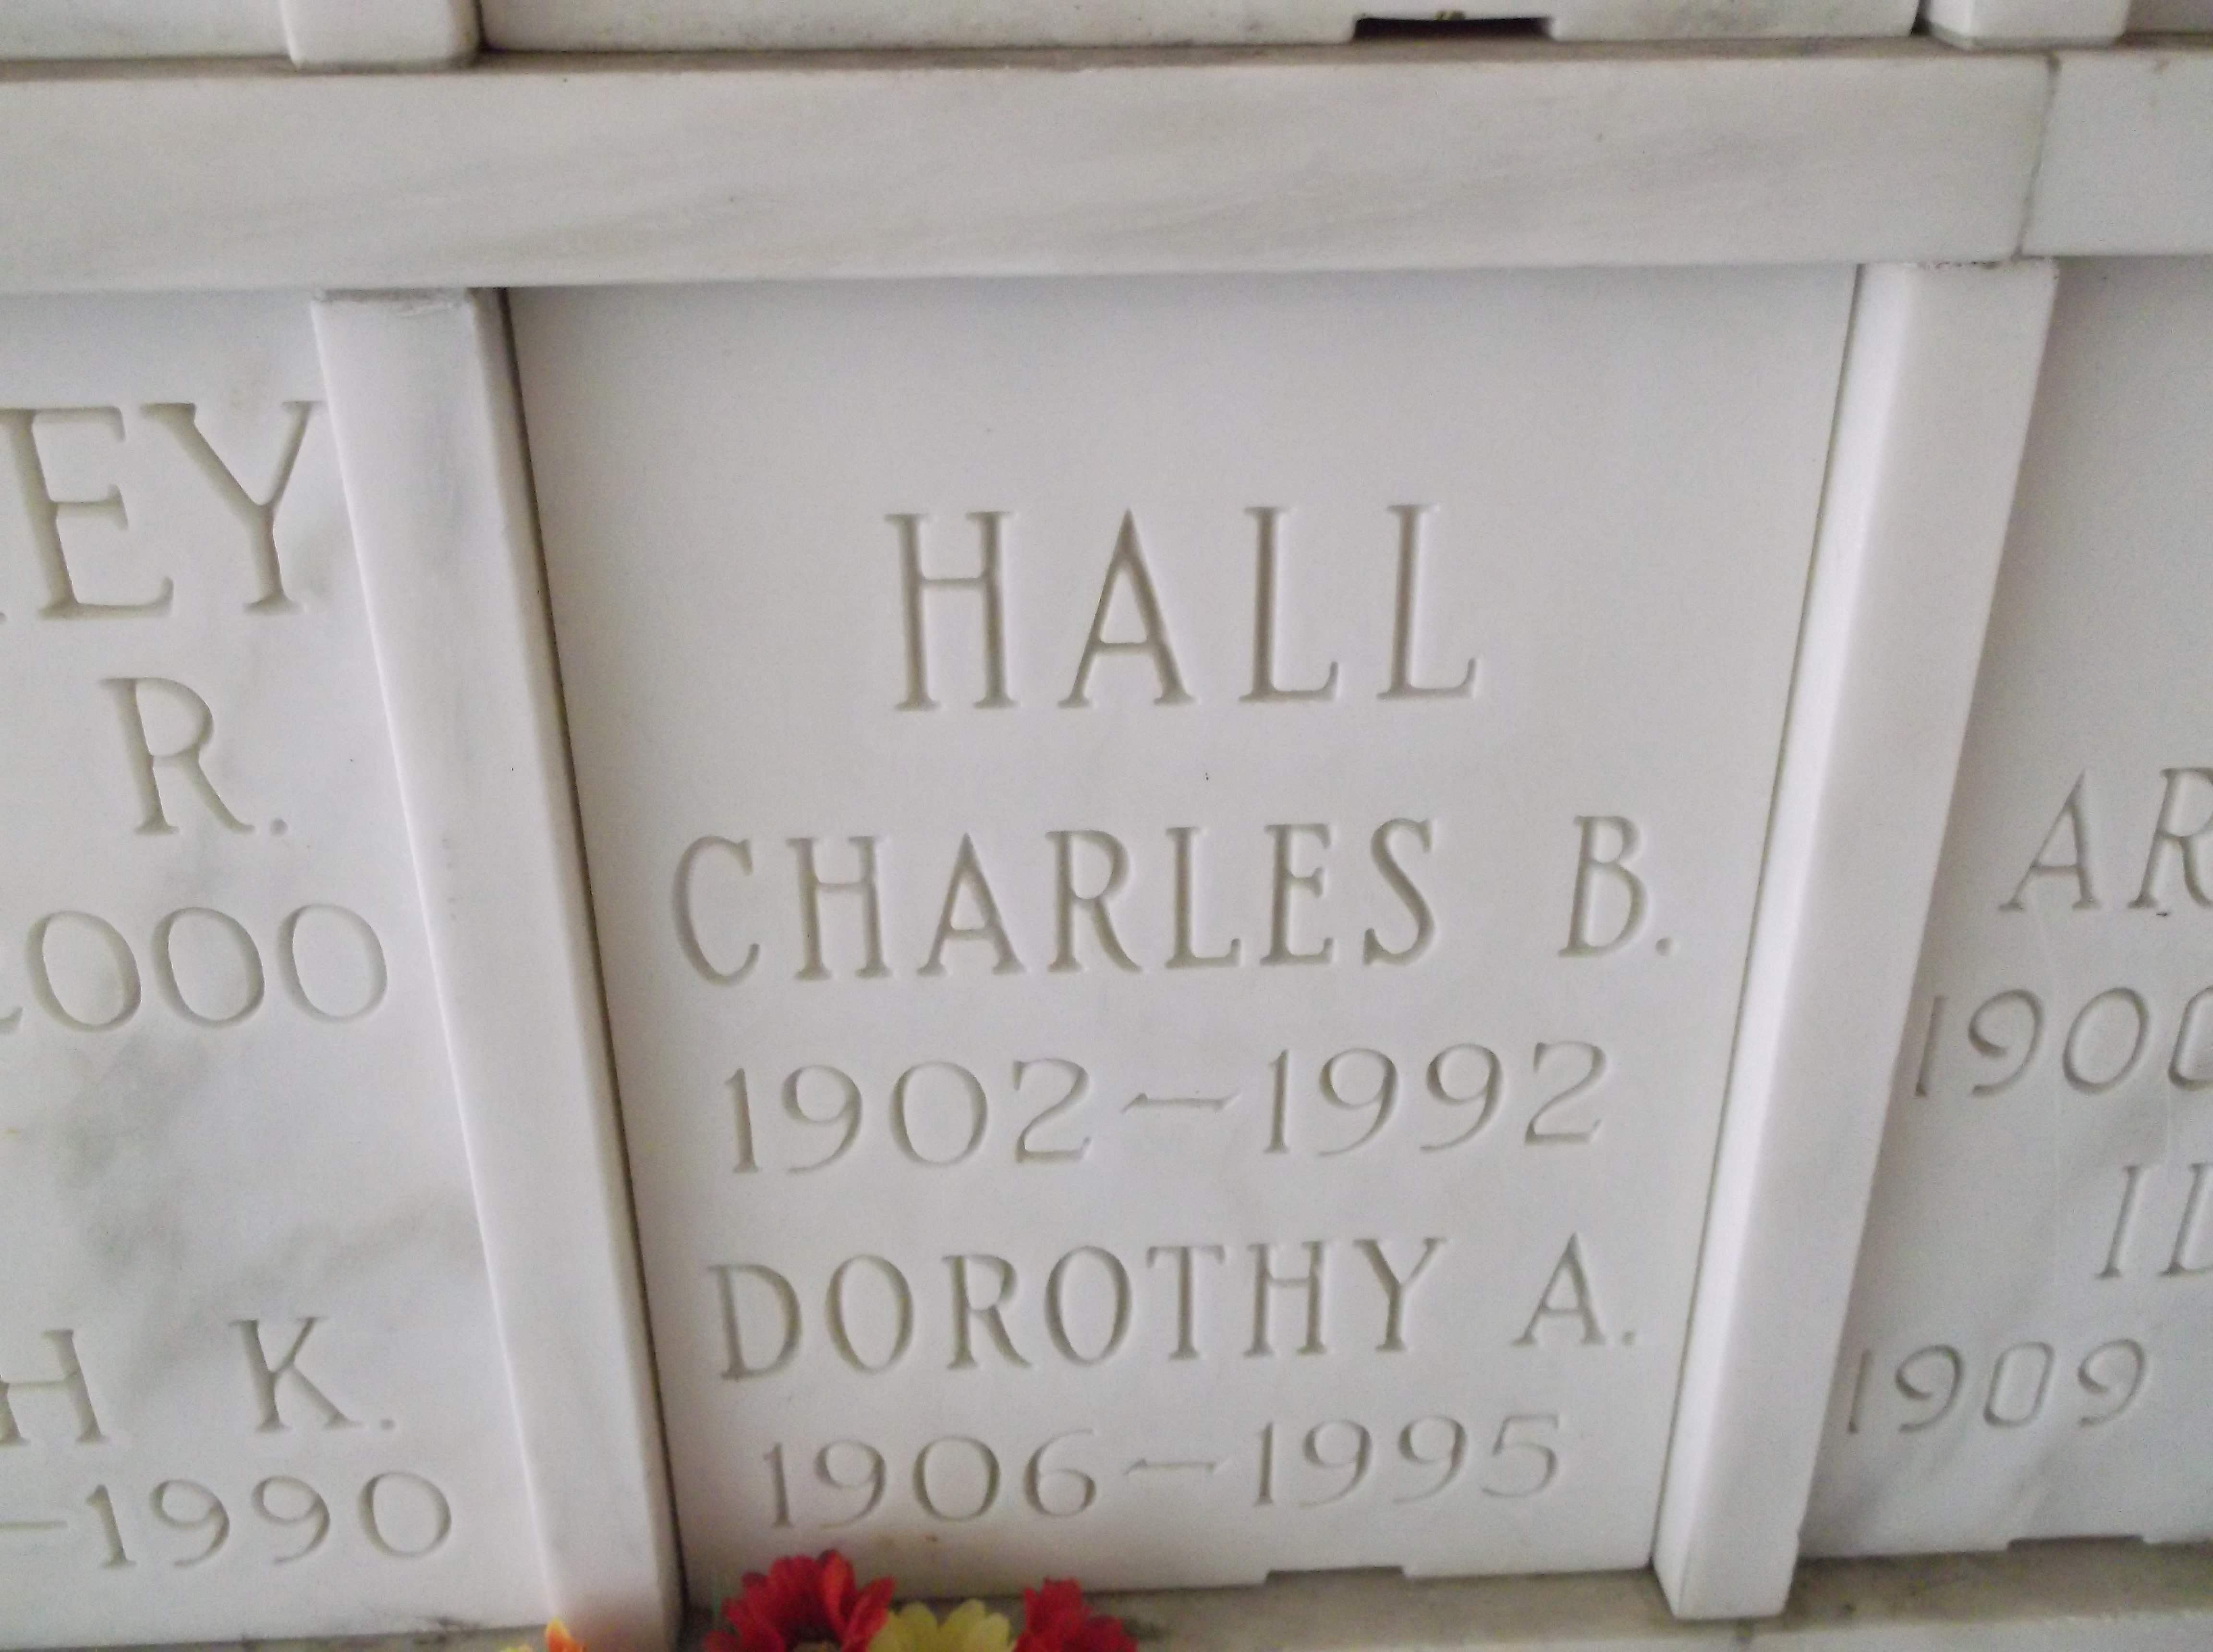 Charles B Hall